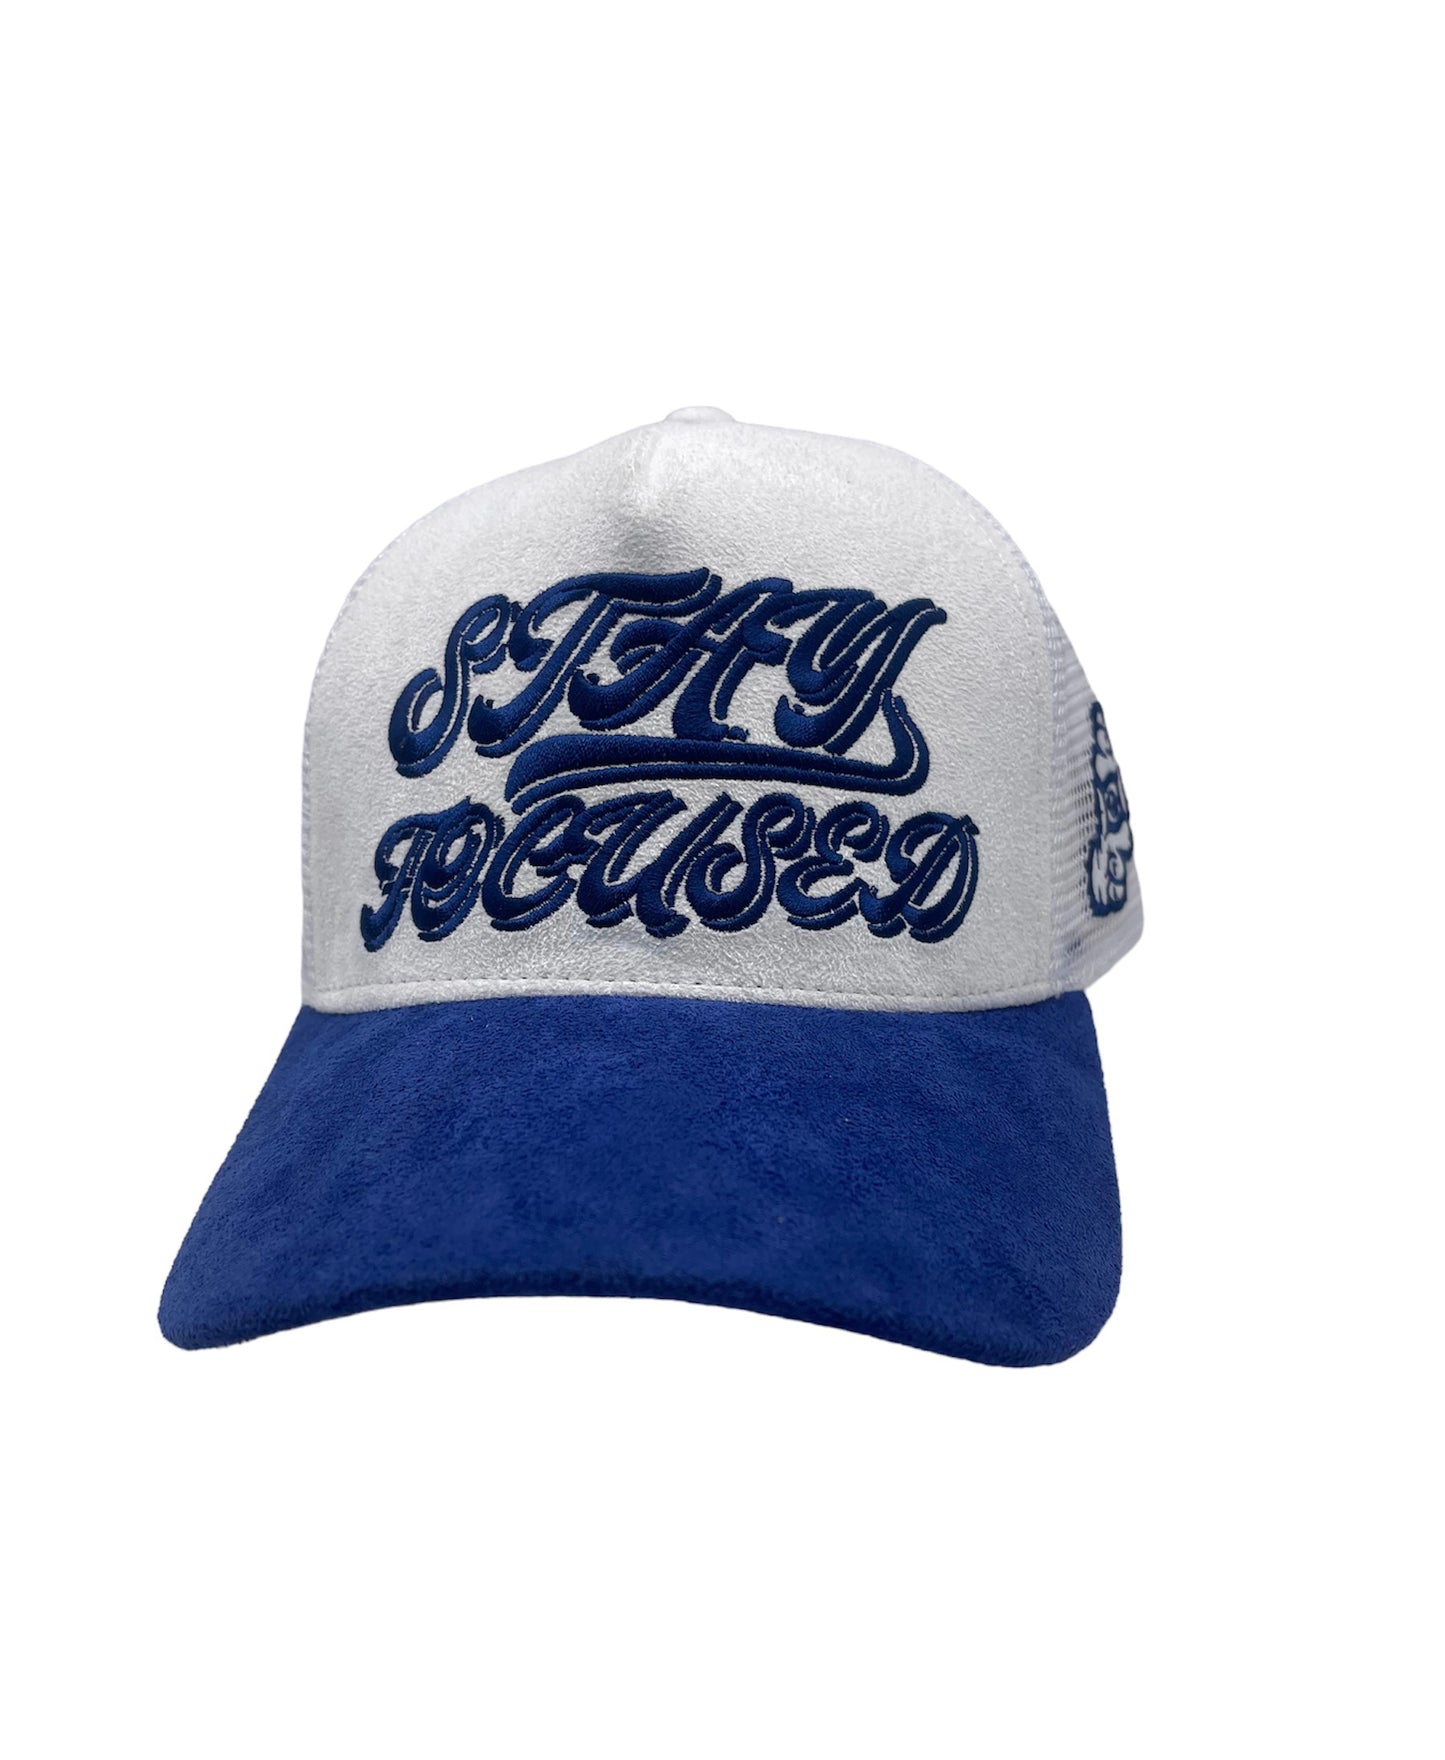 Stay Focused Suede Trucker Hat